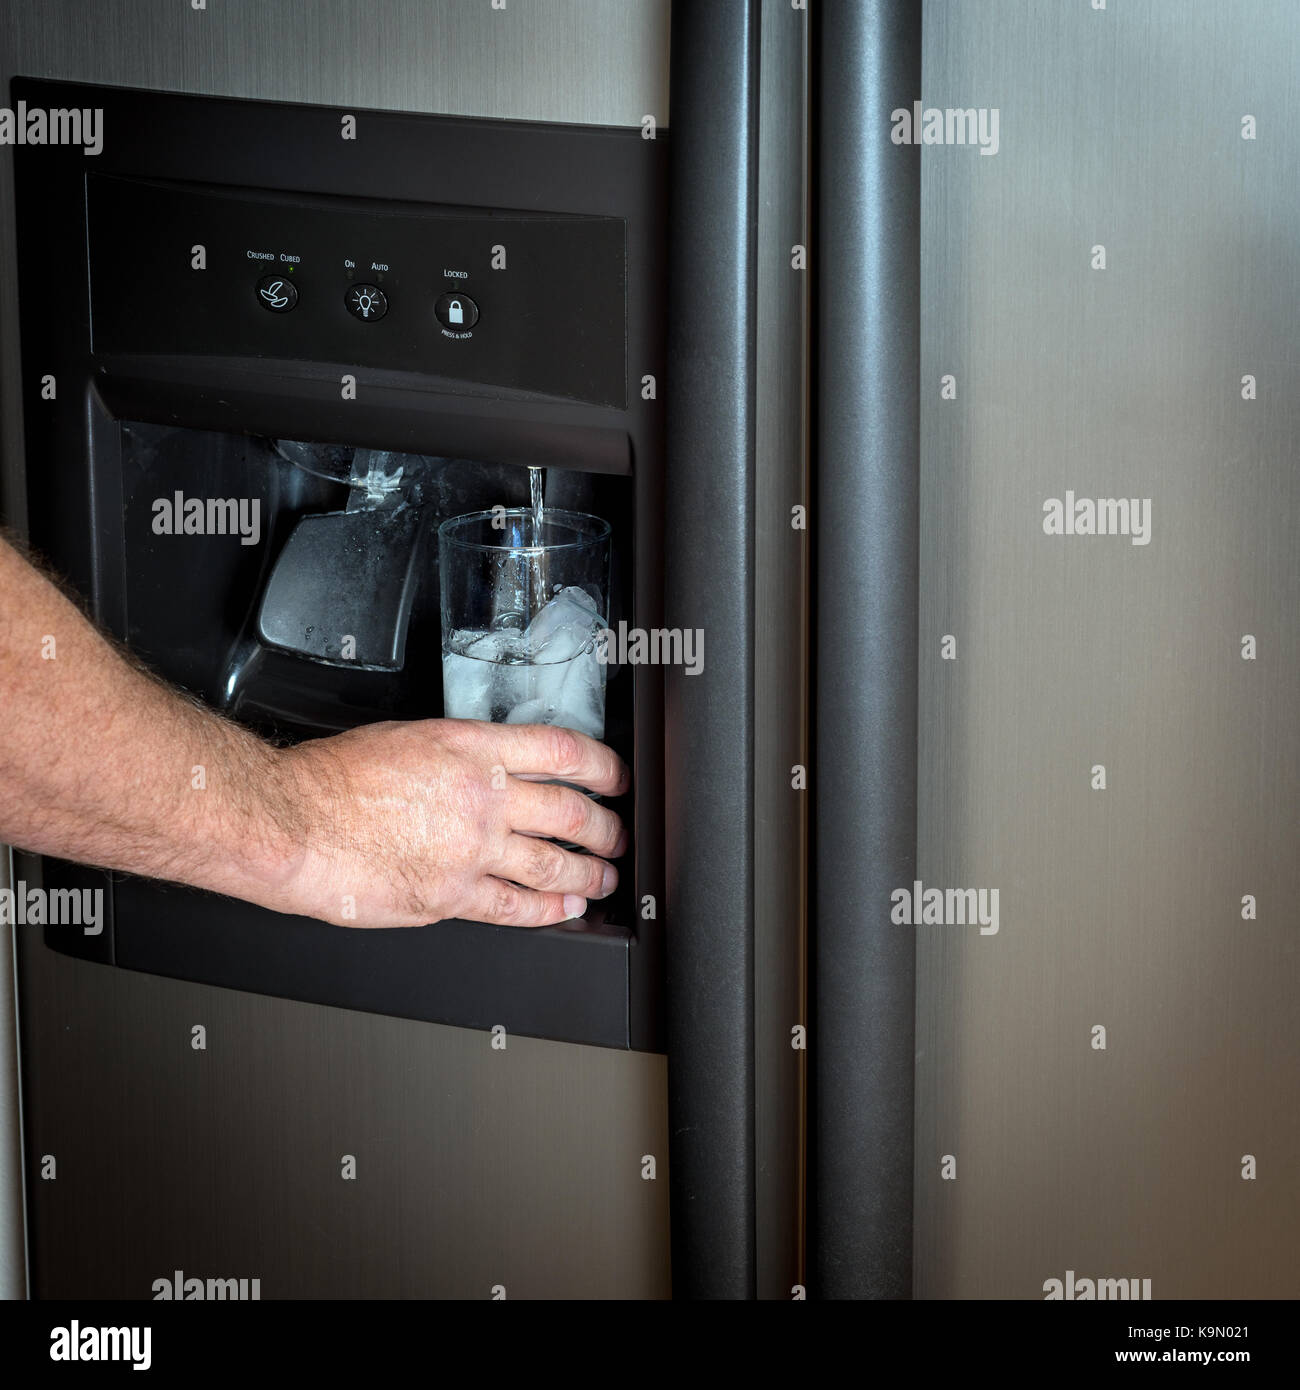 https://c8.alamy.com/compes/k9n021/maquina-de-hielo-y-dispensador-de-agua-en-la-puerta-de-un-frigorifico-k9n021.jpg